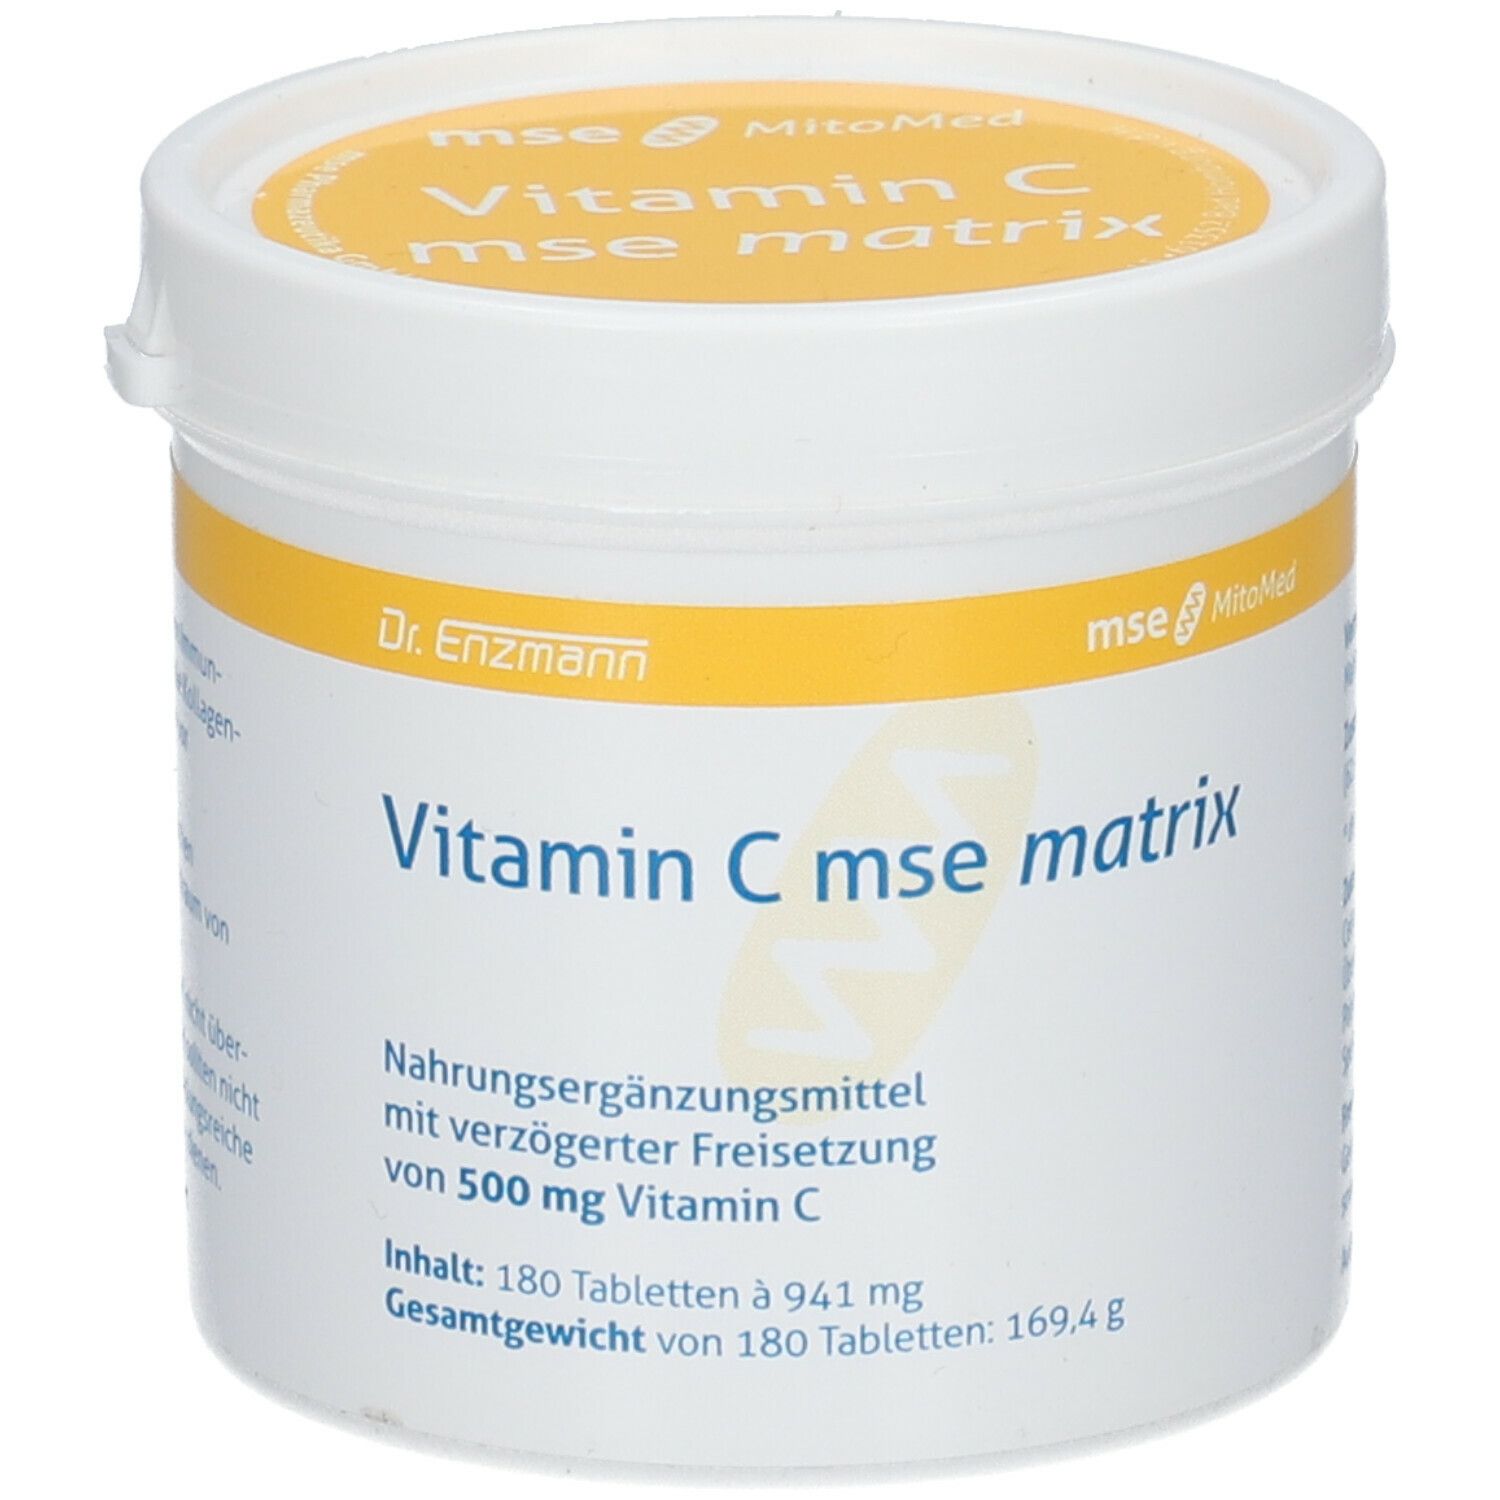 Dr. Enzmann Vitamin C MSE Matrix Tabletten